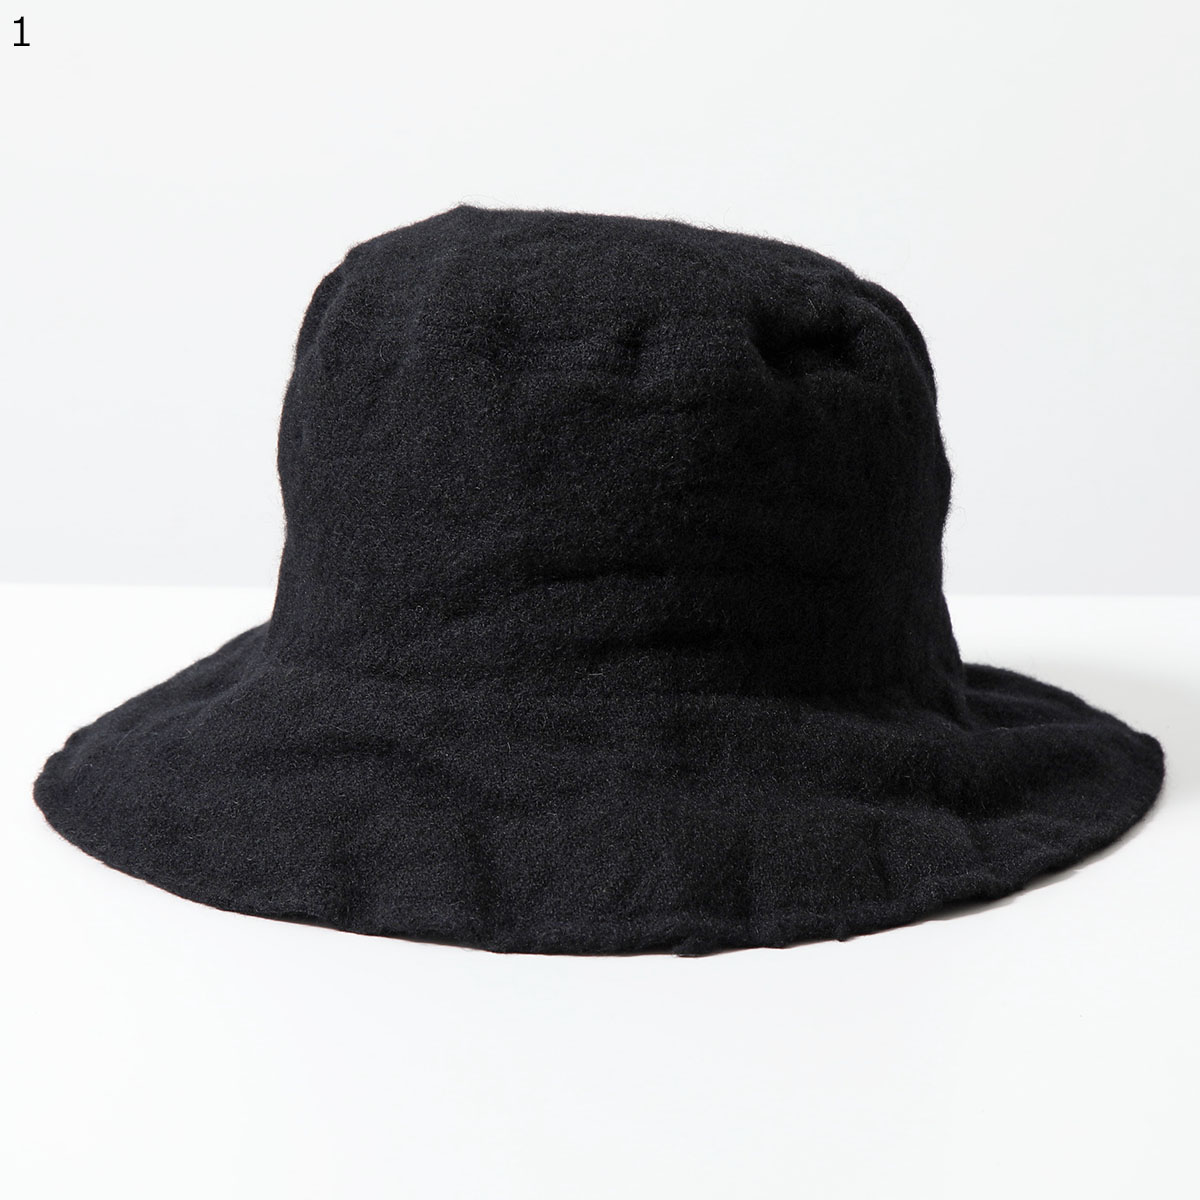 COMME des GARCONS SHIRT コムデギャルソン シャツ バケットハット FL K601 W23 メンズ ウール×ナイロン 帽子  カラー2色